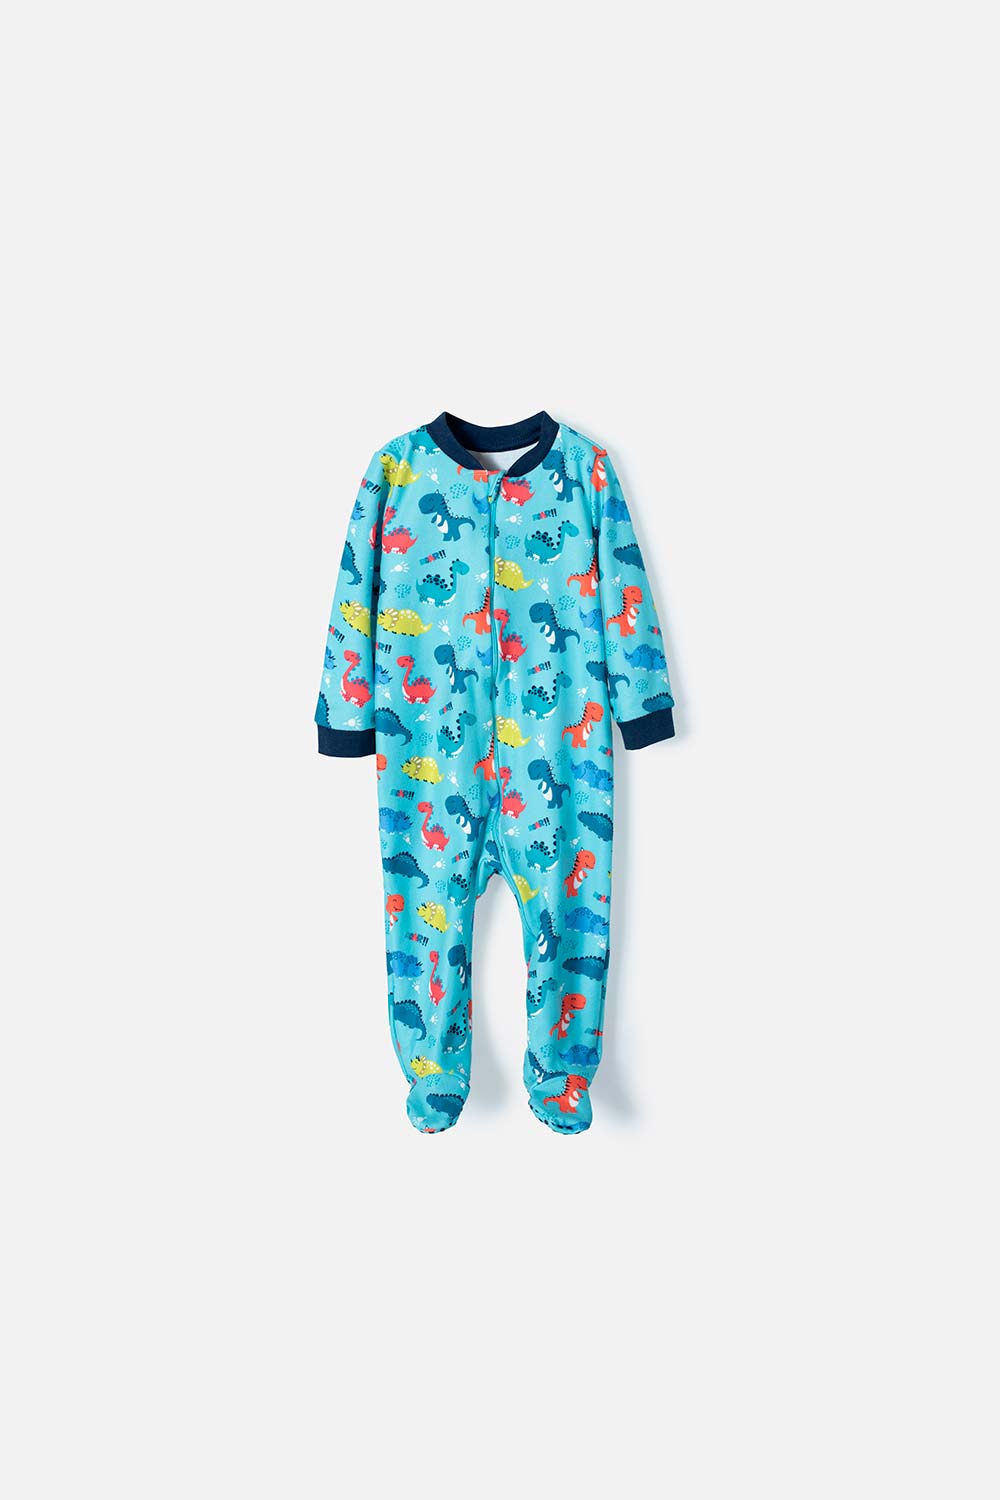 Pijama para bebé niño de dinosaurios, manga larga de LittleMIC. - Ponemos  la Fantasía!